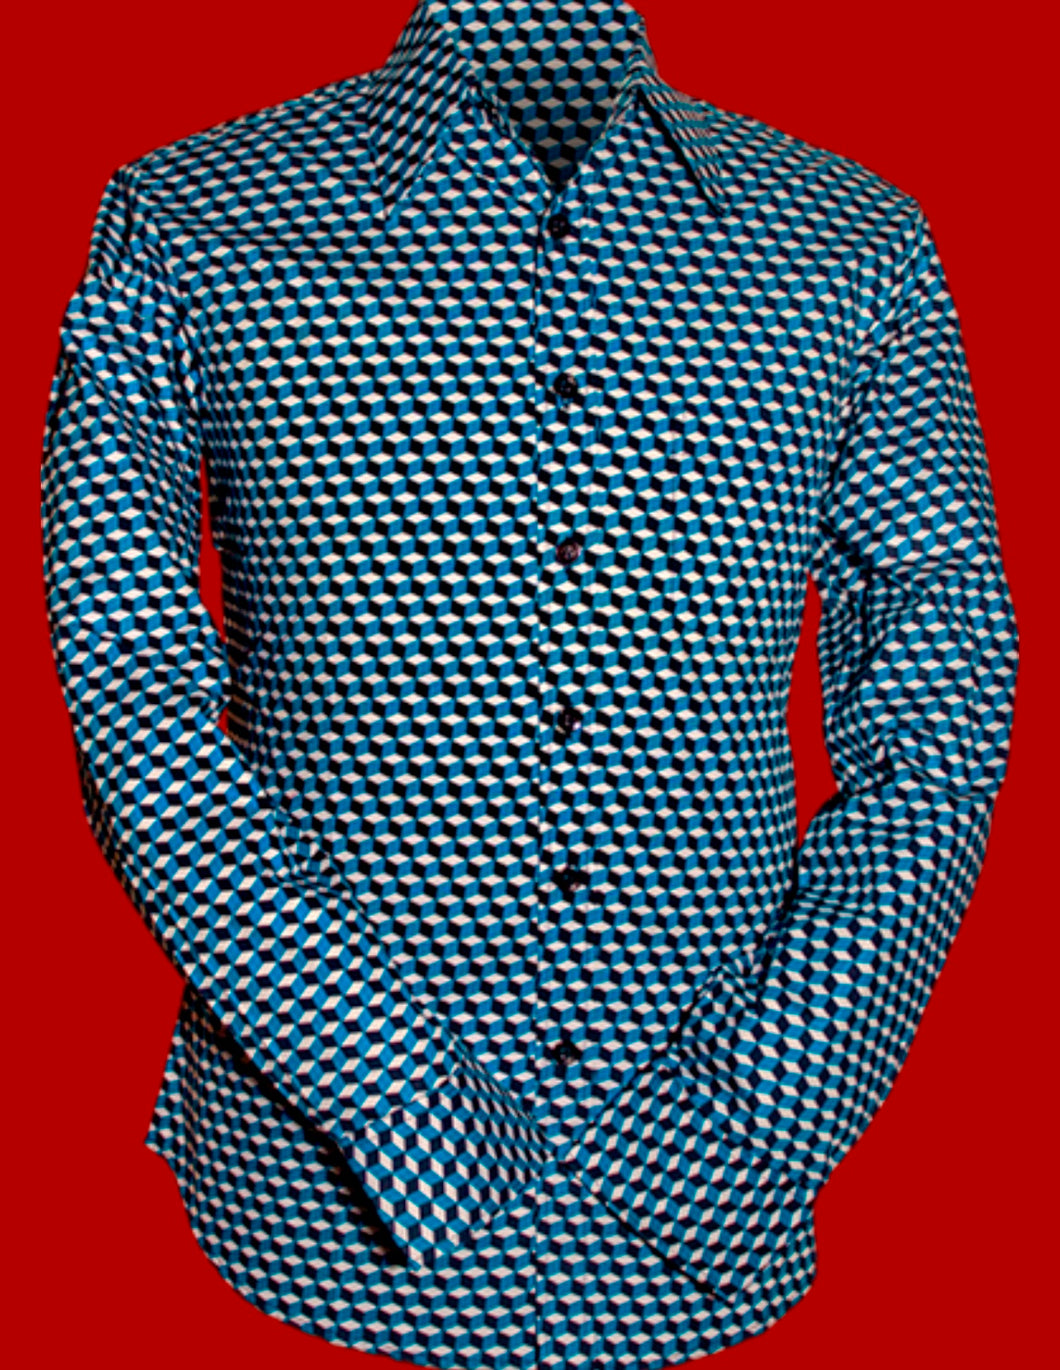 Stairs design Long Sleeved Retro 70s Cotton Shirt (navy,Blue, light blue)